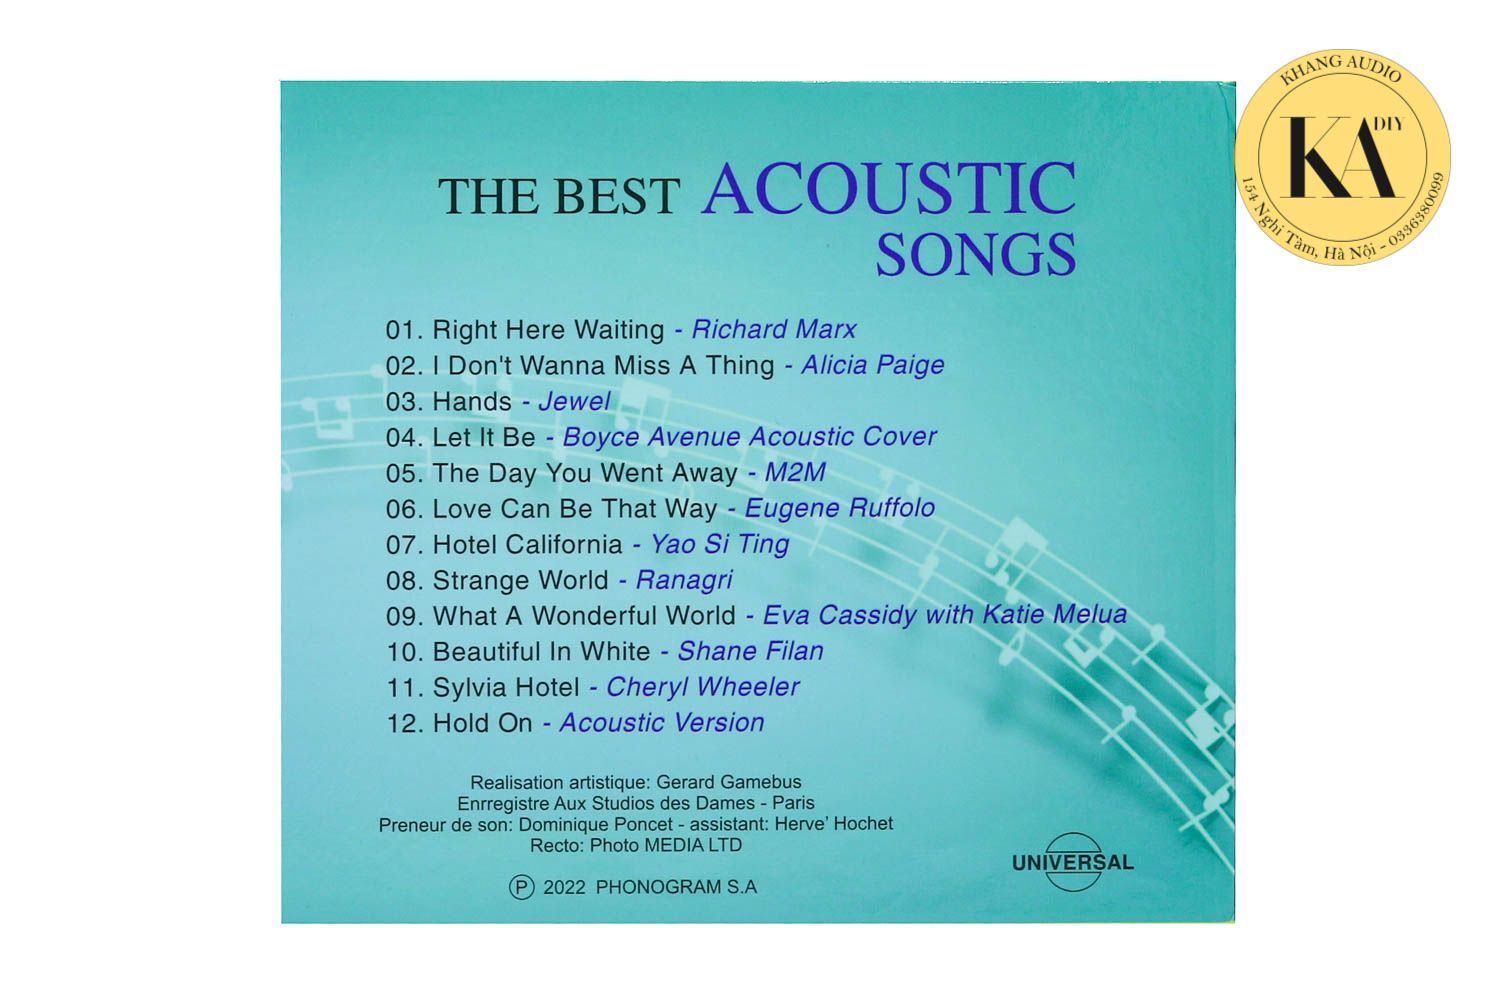 Master Acoustic Vol.3